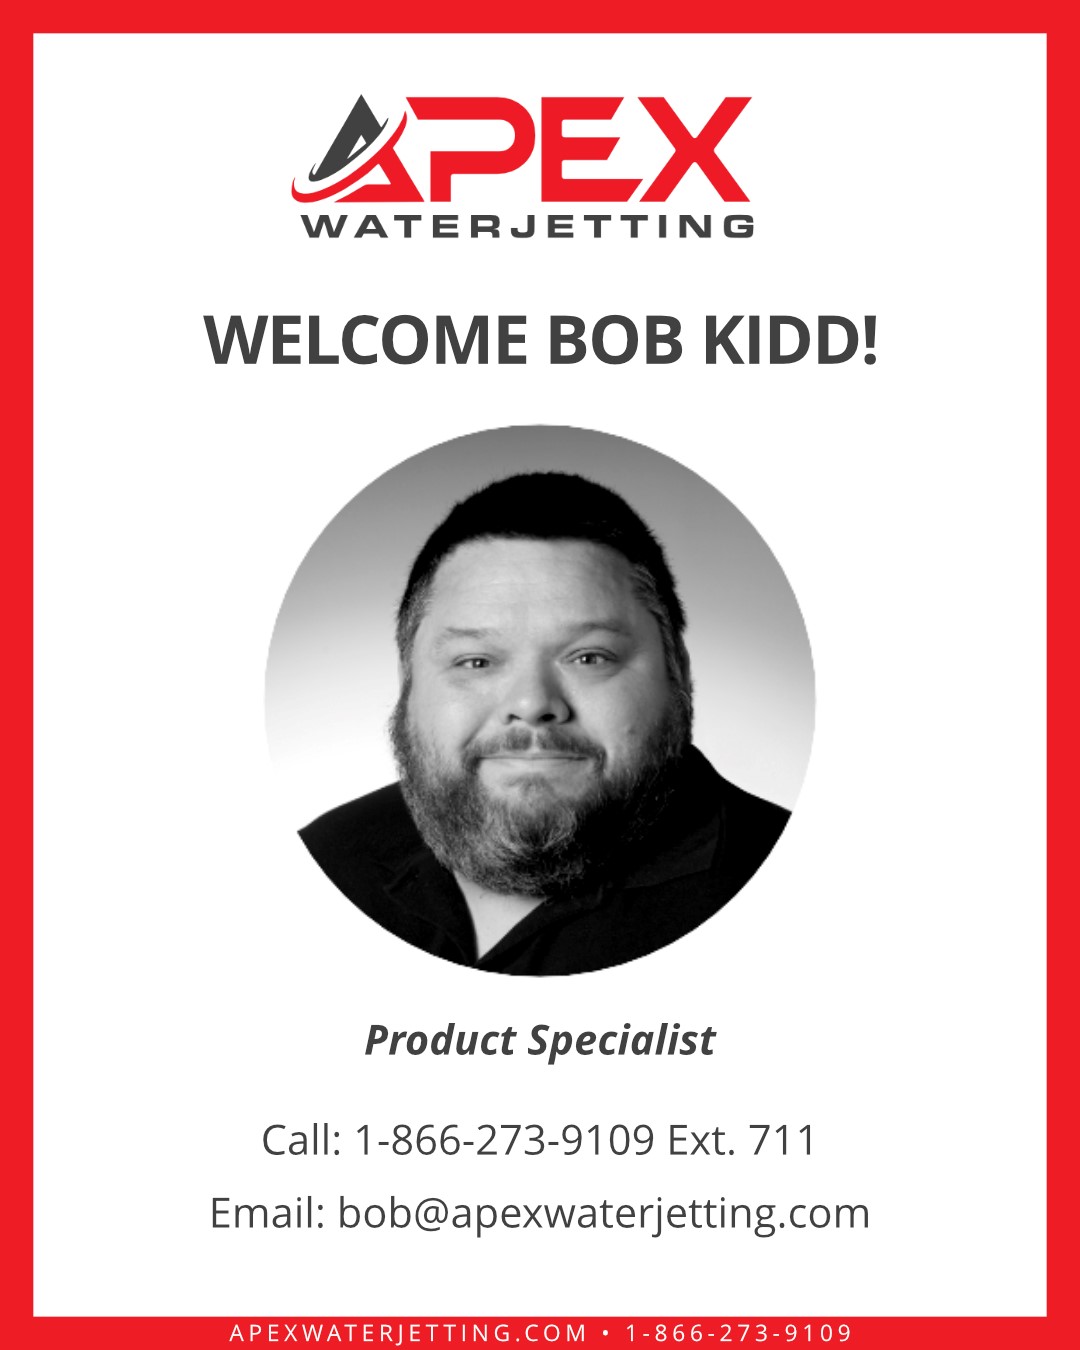 APEX Waterjetting Welcomes Bob Kidd